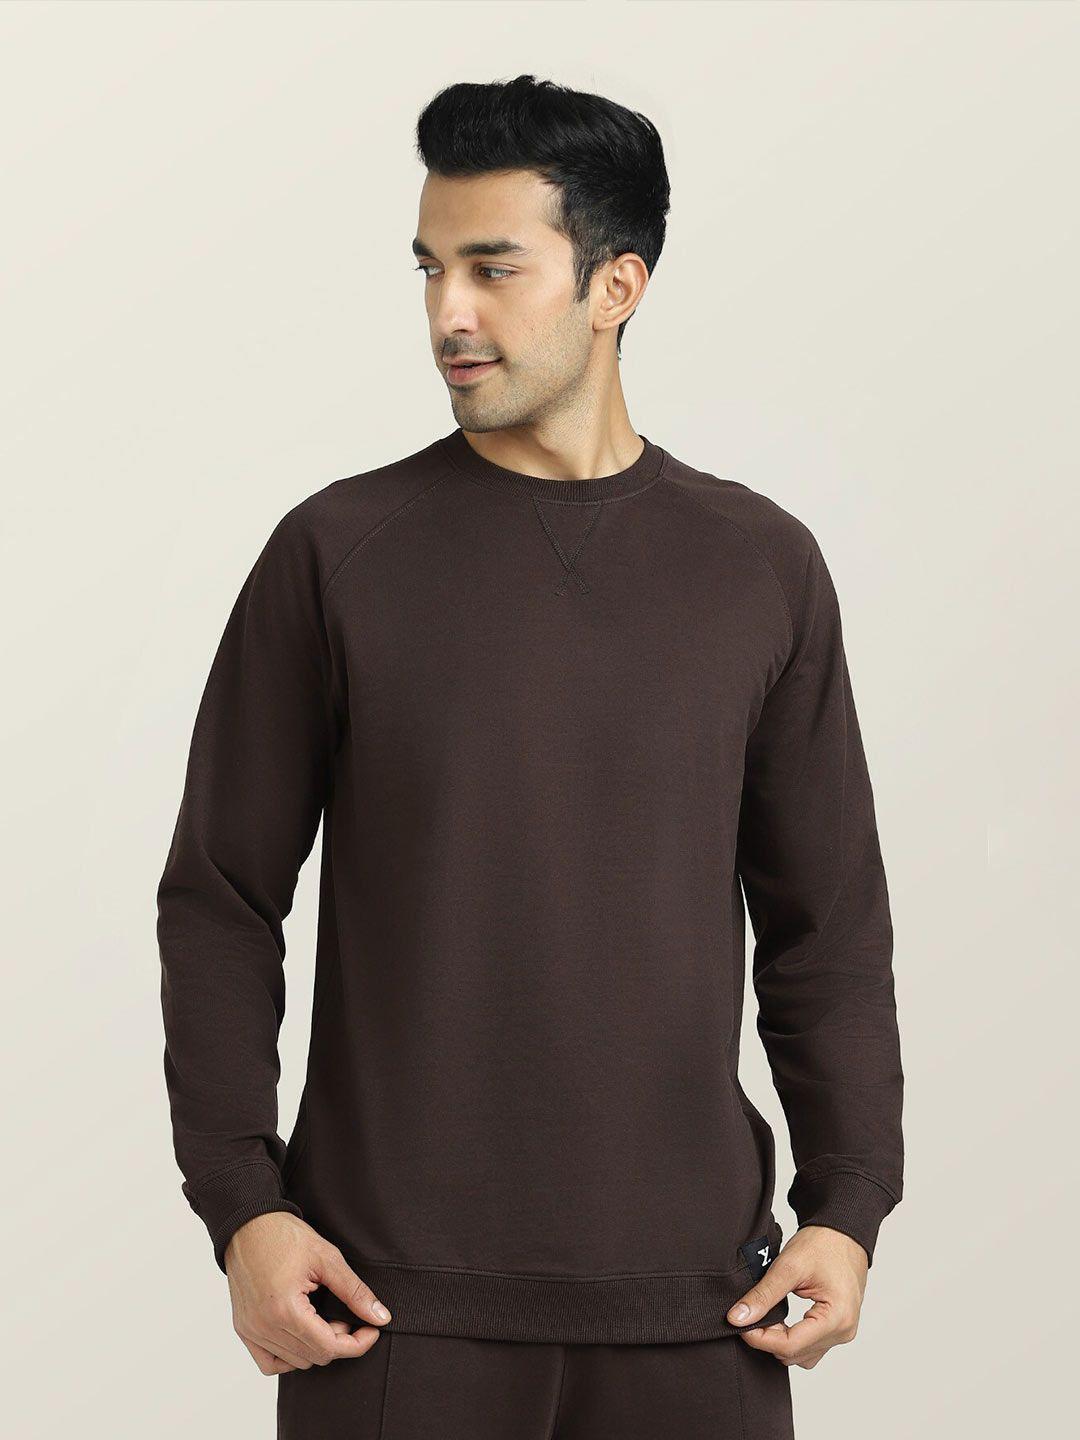 xyxx-men-brown-solid-cotton-sweatshirt